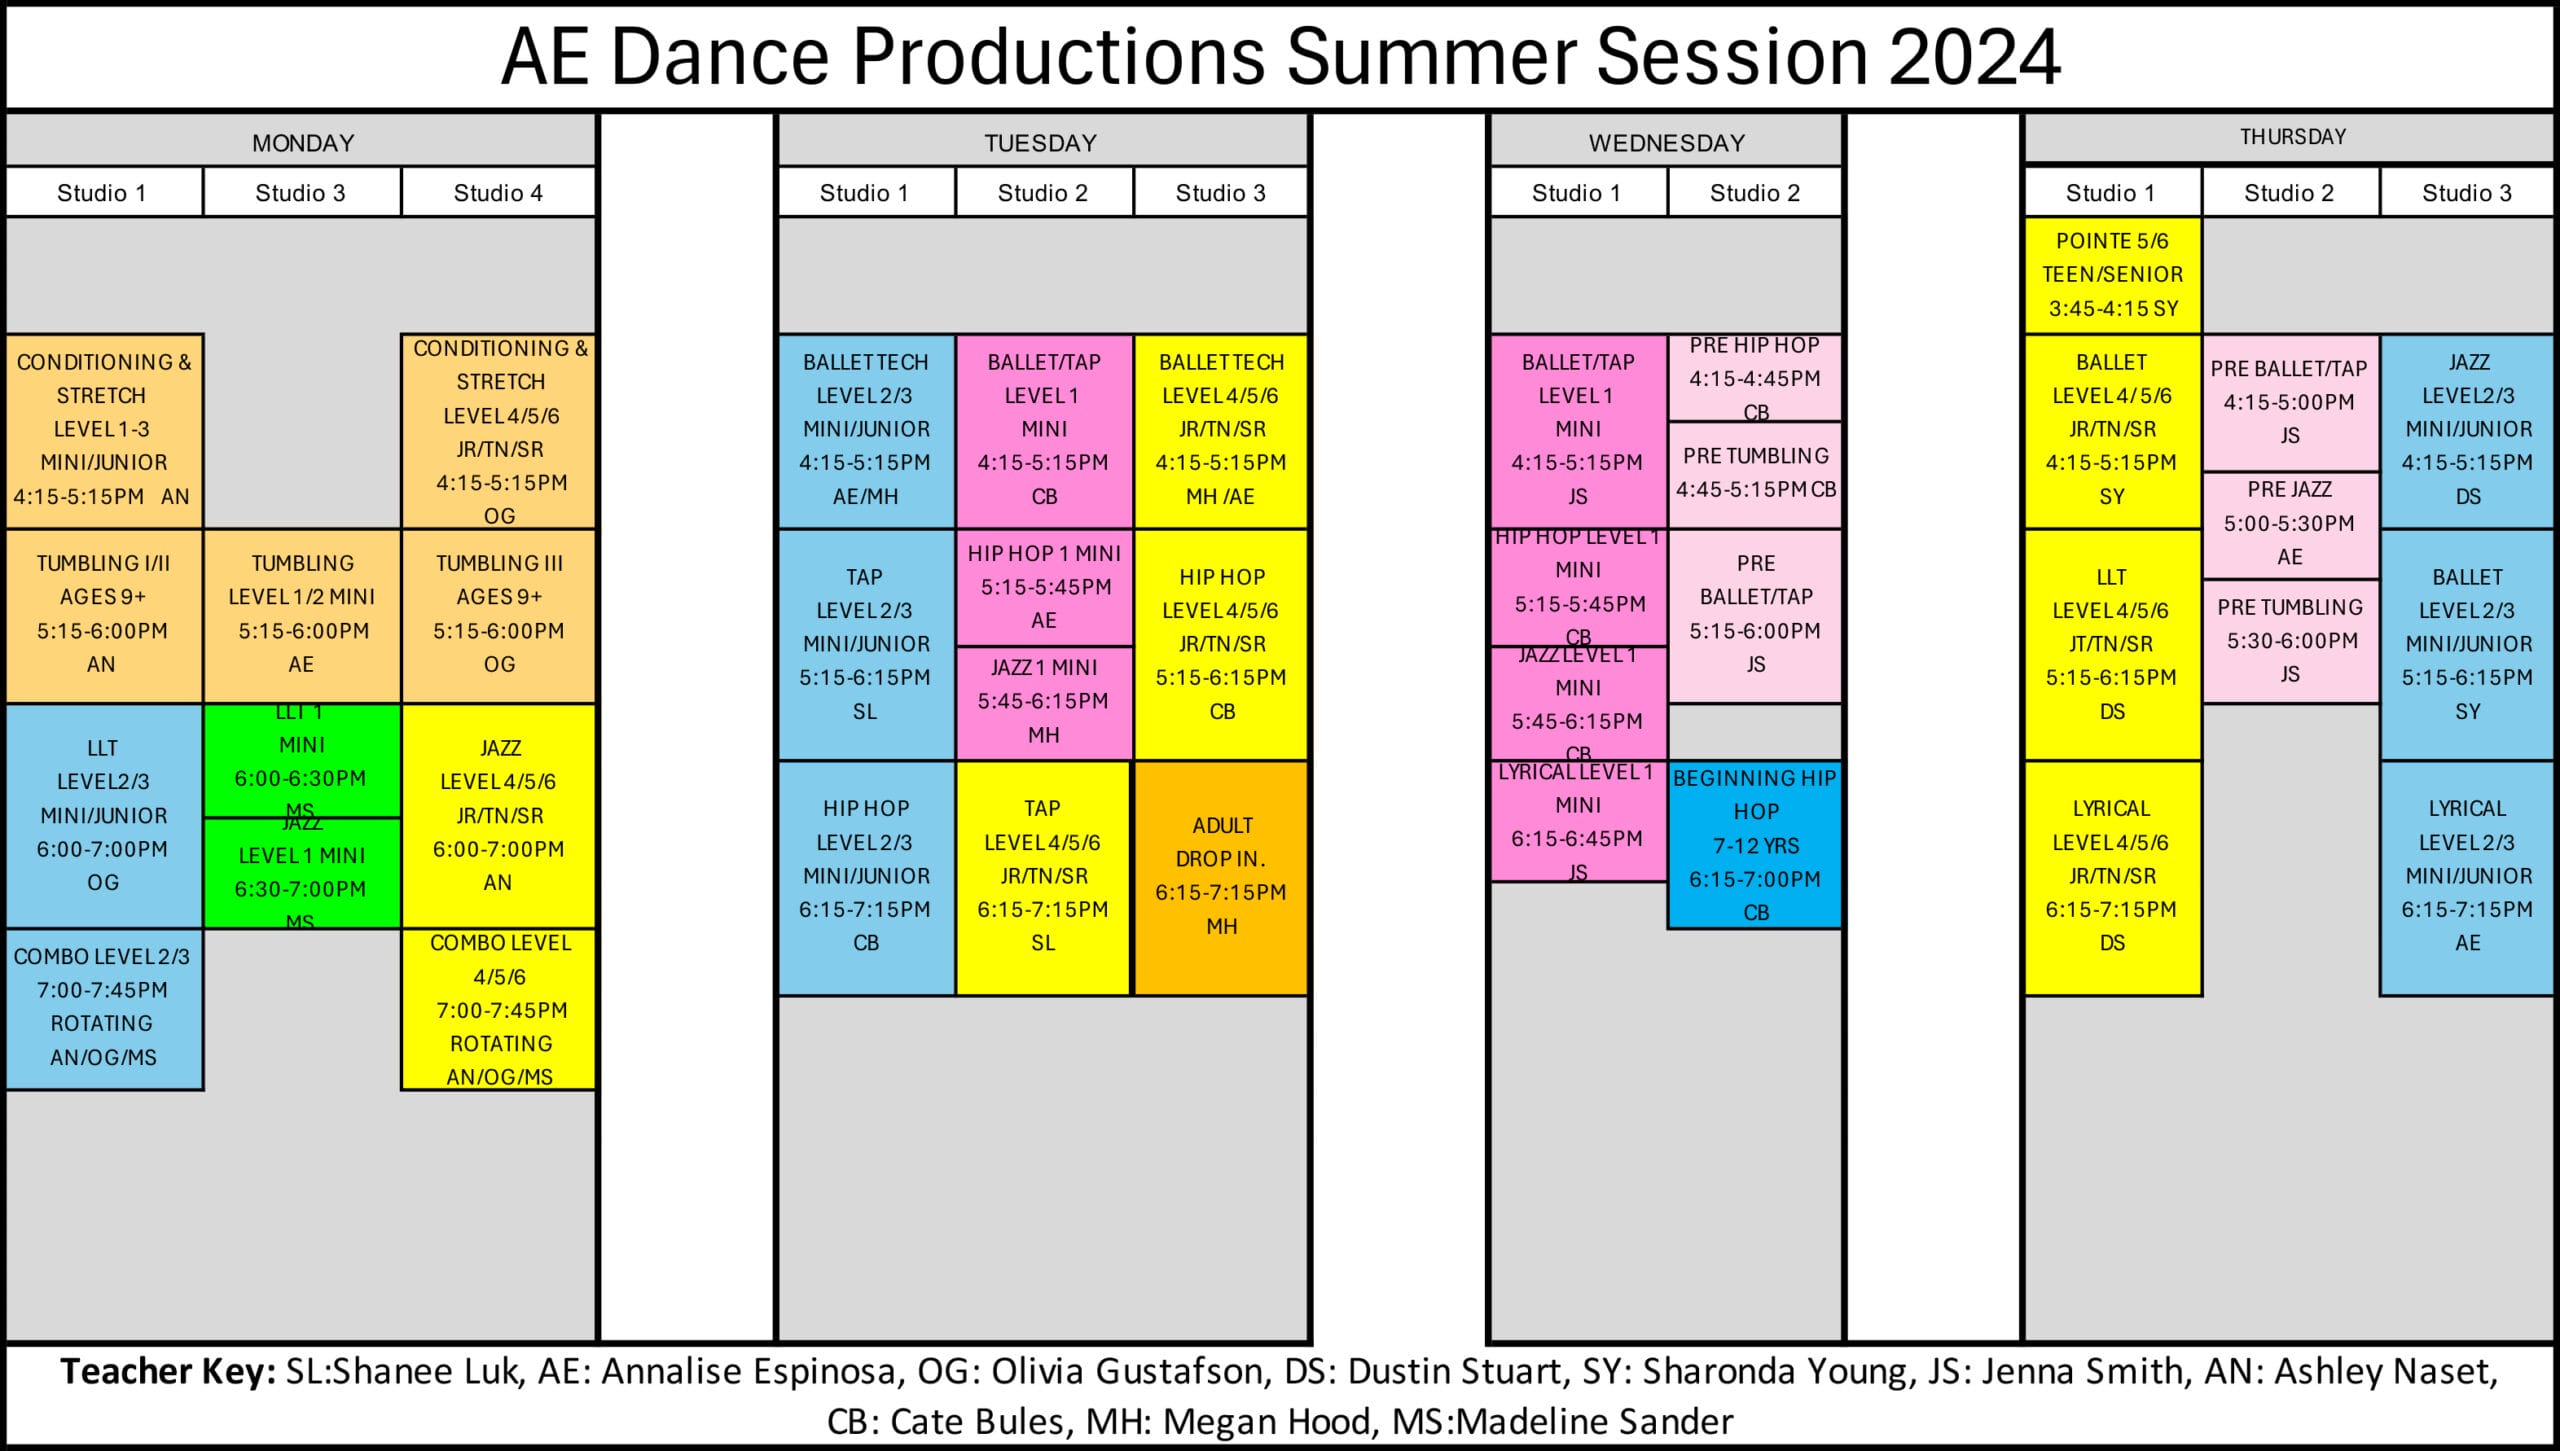 Copy of Summer Schedule 2024 v.7 5-23-24